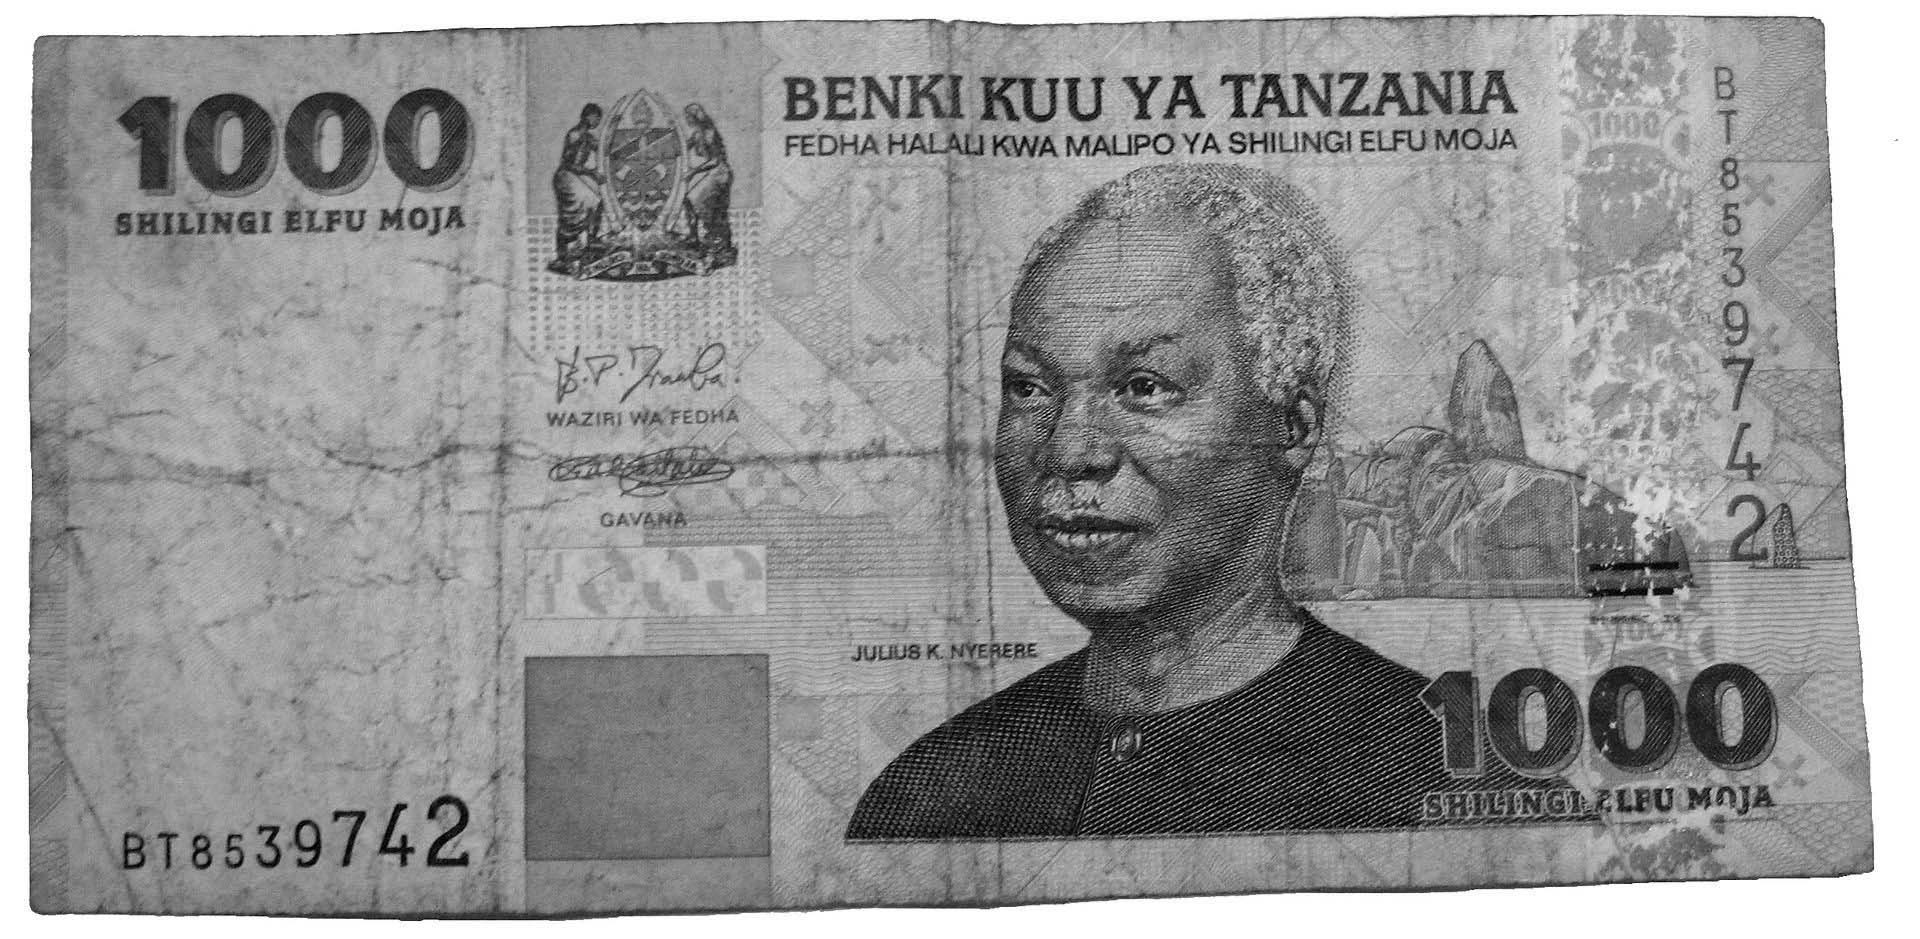 1000 Tanzanian shillings note